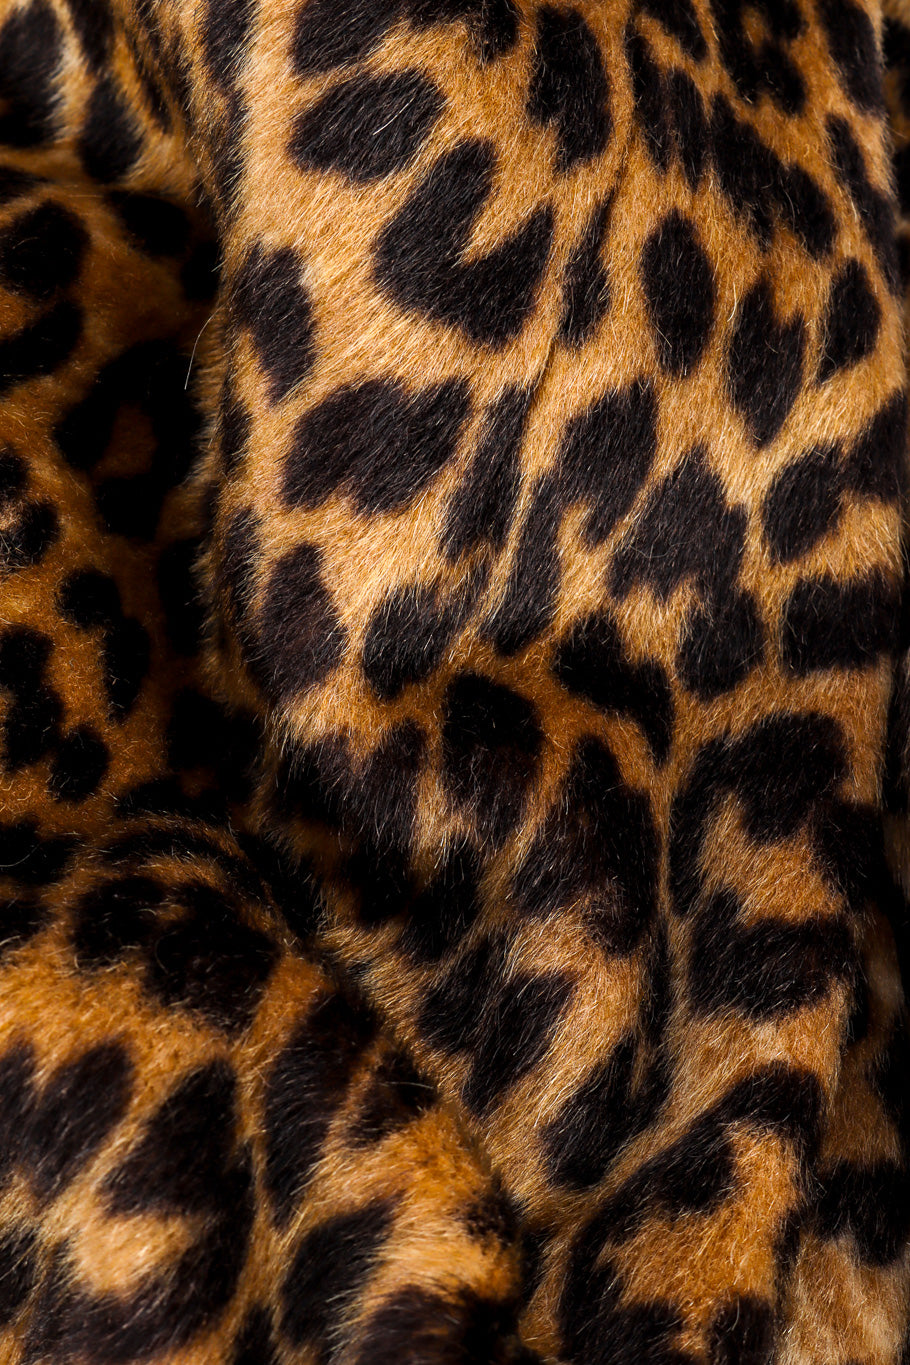 Vintage Marcus Leopard Print Jacket fabric closeup @recessla